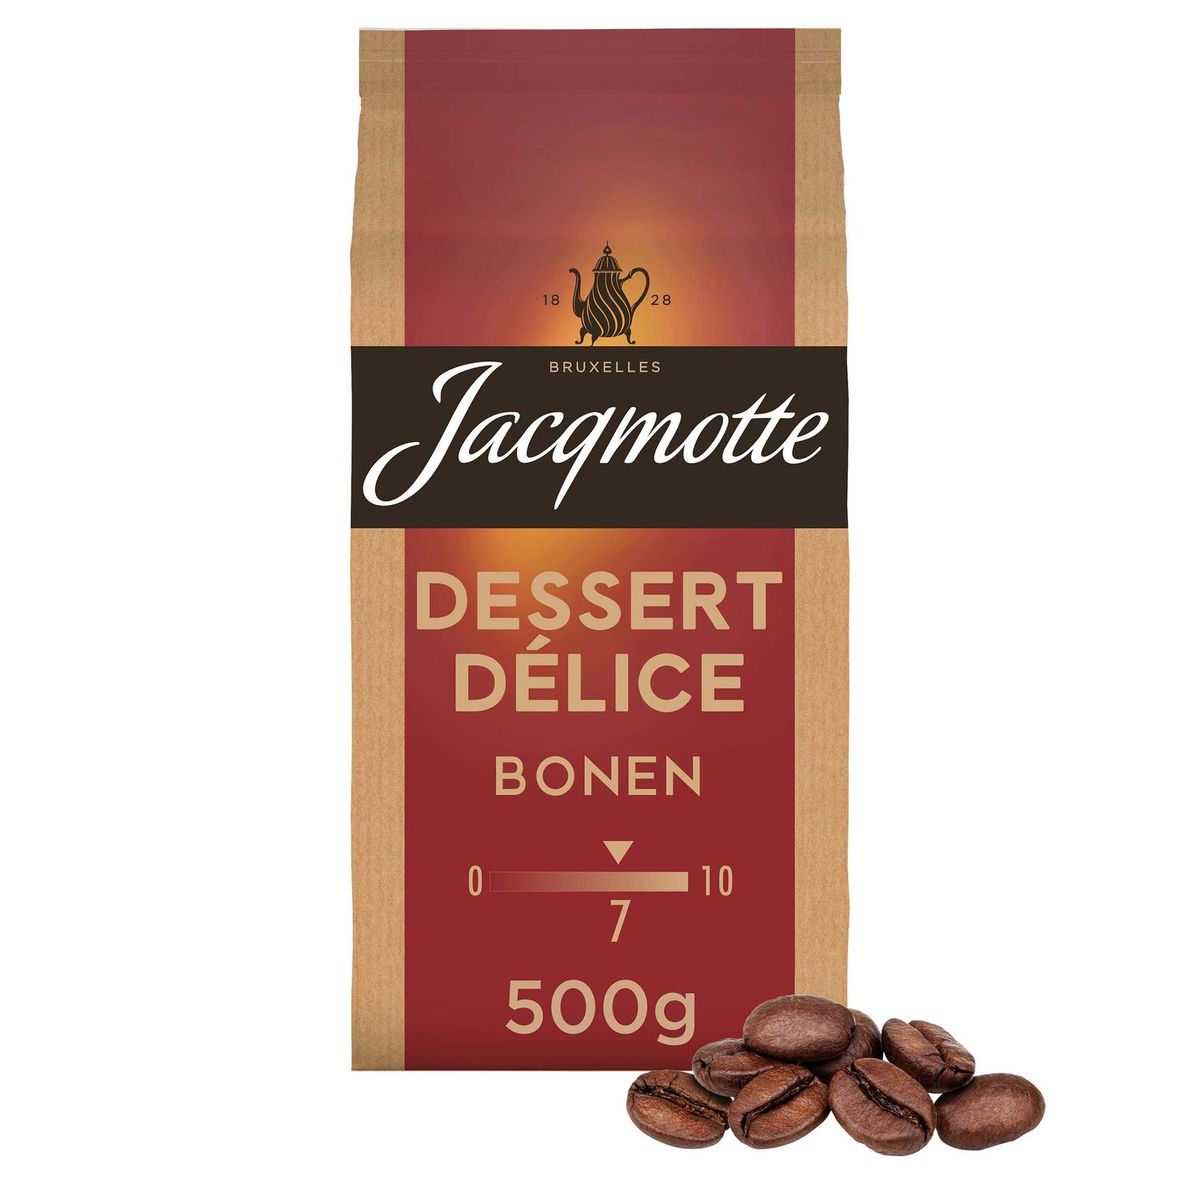 Jacqmotte Koffie Bonen Dessert Delice 500g